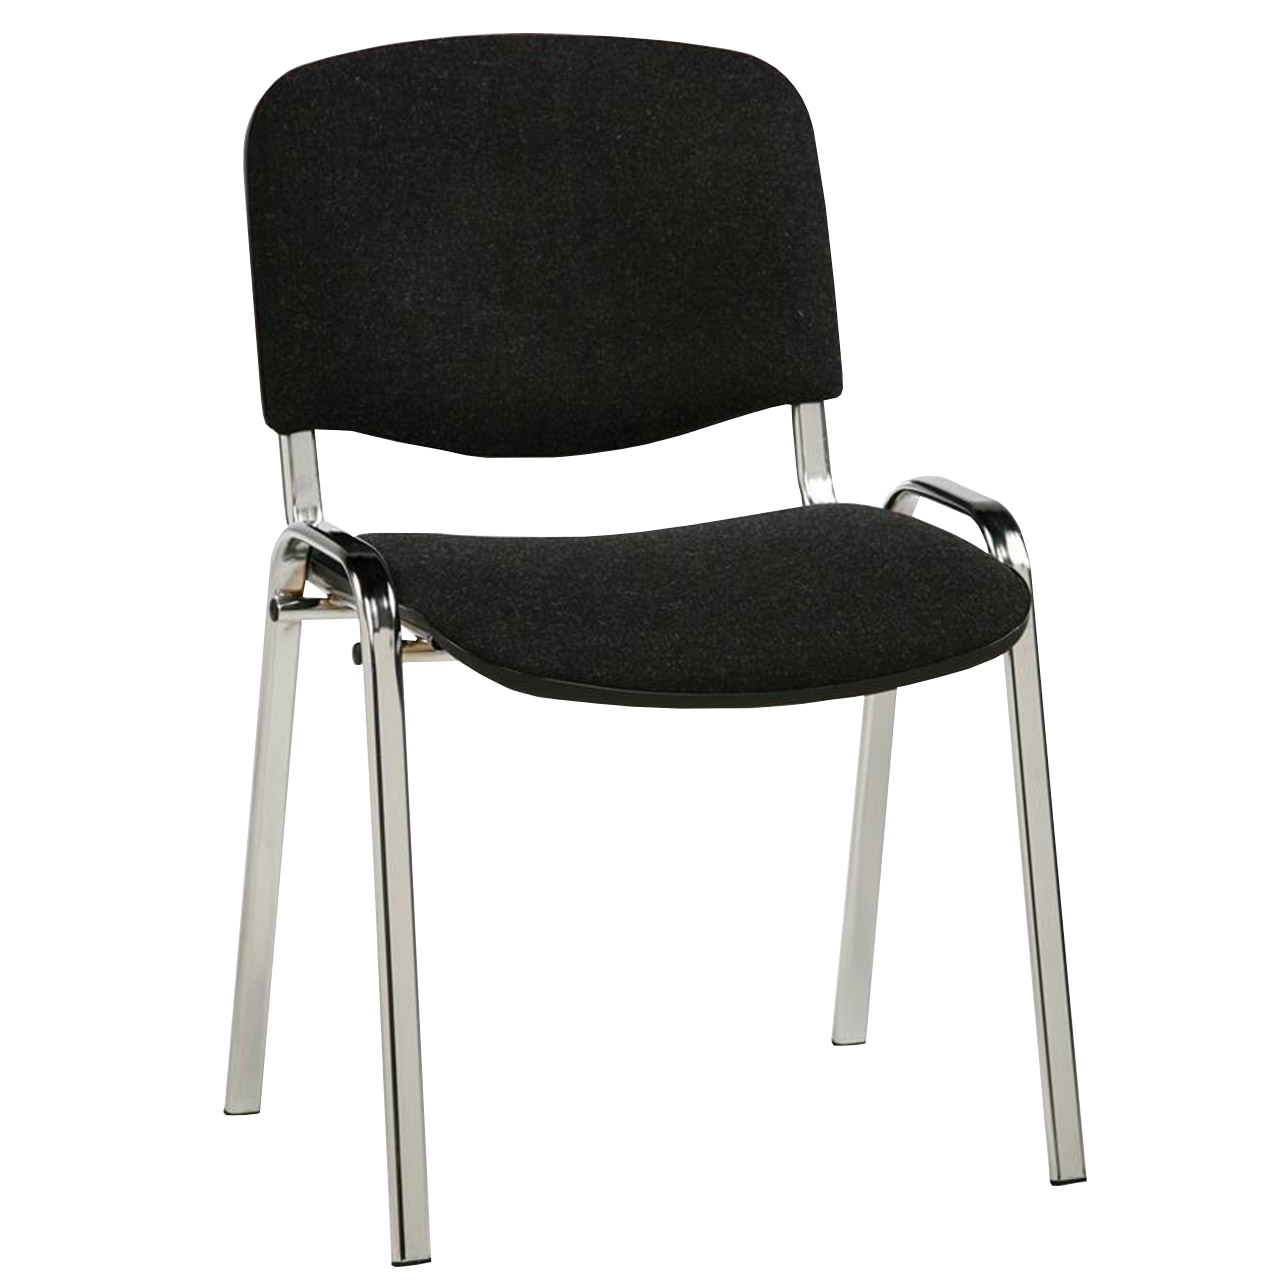 Стул nowy styl ISO Chrome. Стул офисный easy Chair изо с-11 черный (ткань, металл черный). Стул изо хром Фабрикант черный. Стул ISO Chrome v18.